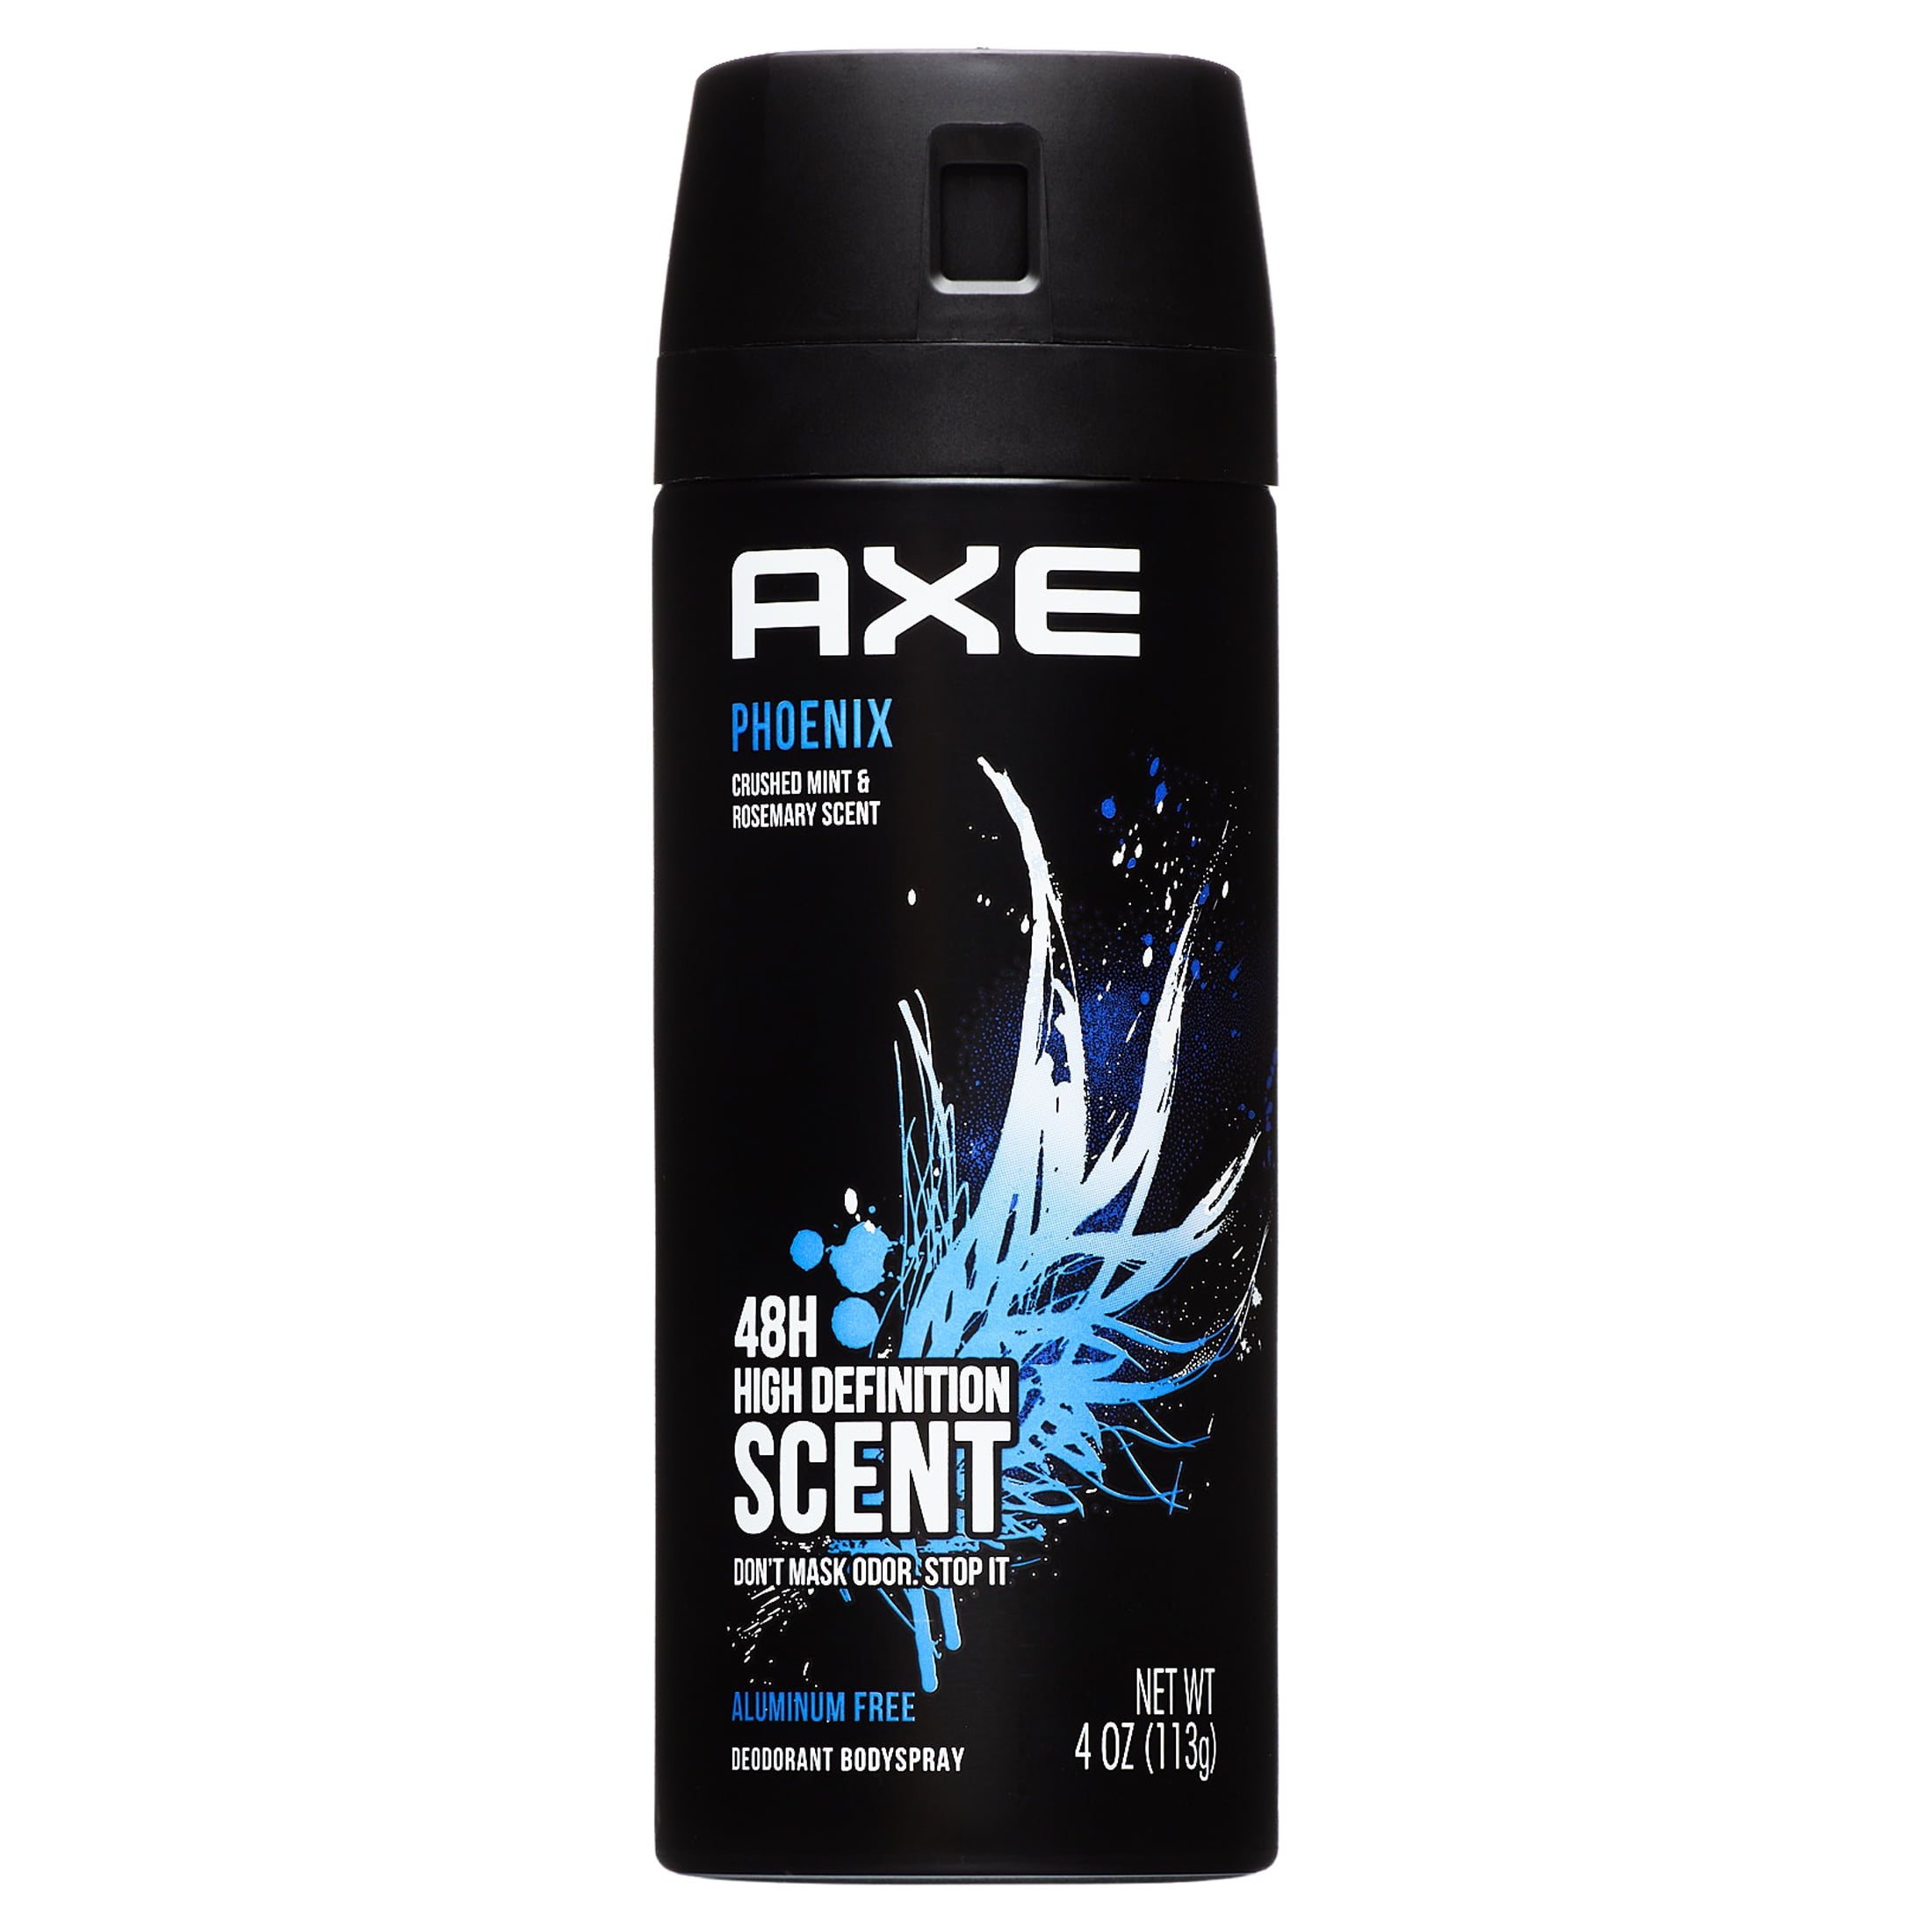 Axe Pheonix 48H High Definition Scent Deodorant Bodyspray 4 oz Walmart.com